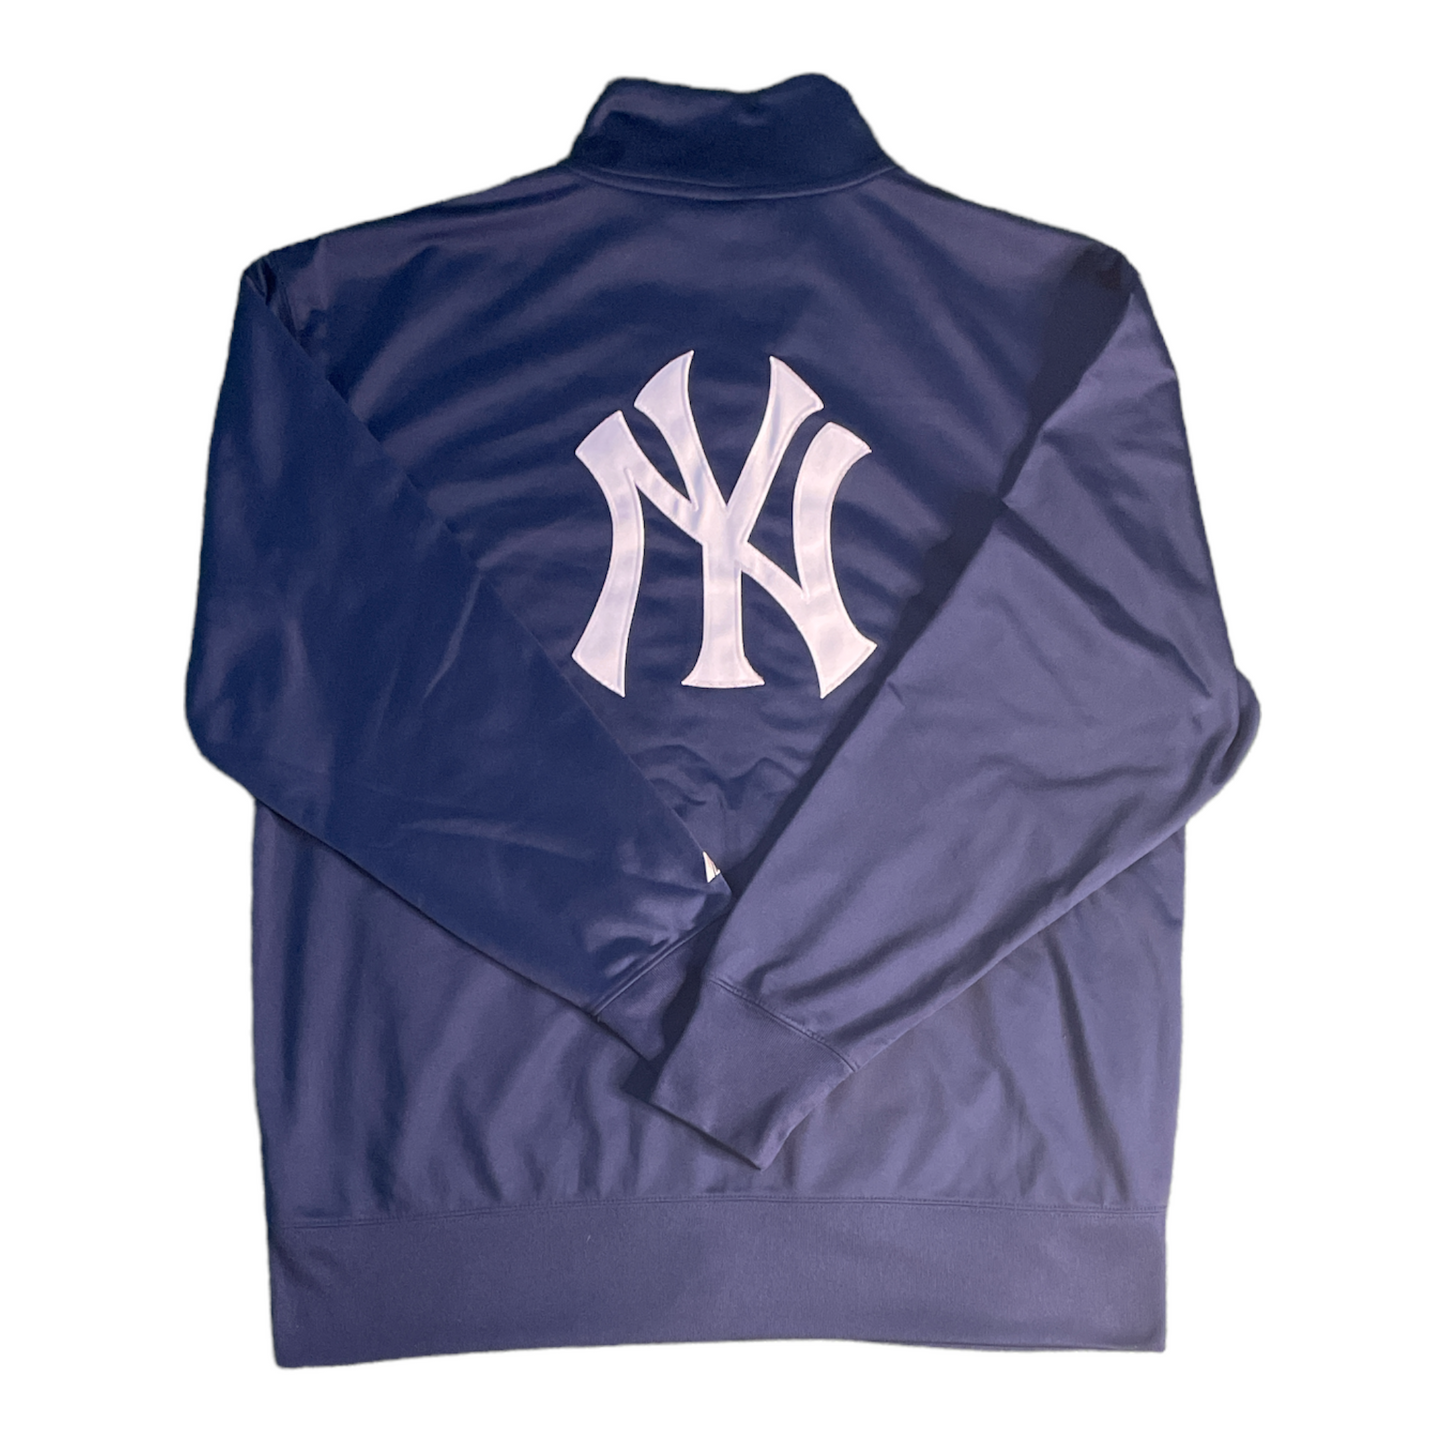 NY Yankees Fleece Majestic Jacket Tagless FITS XL